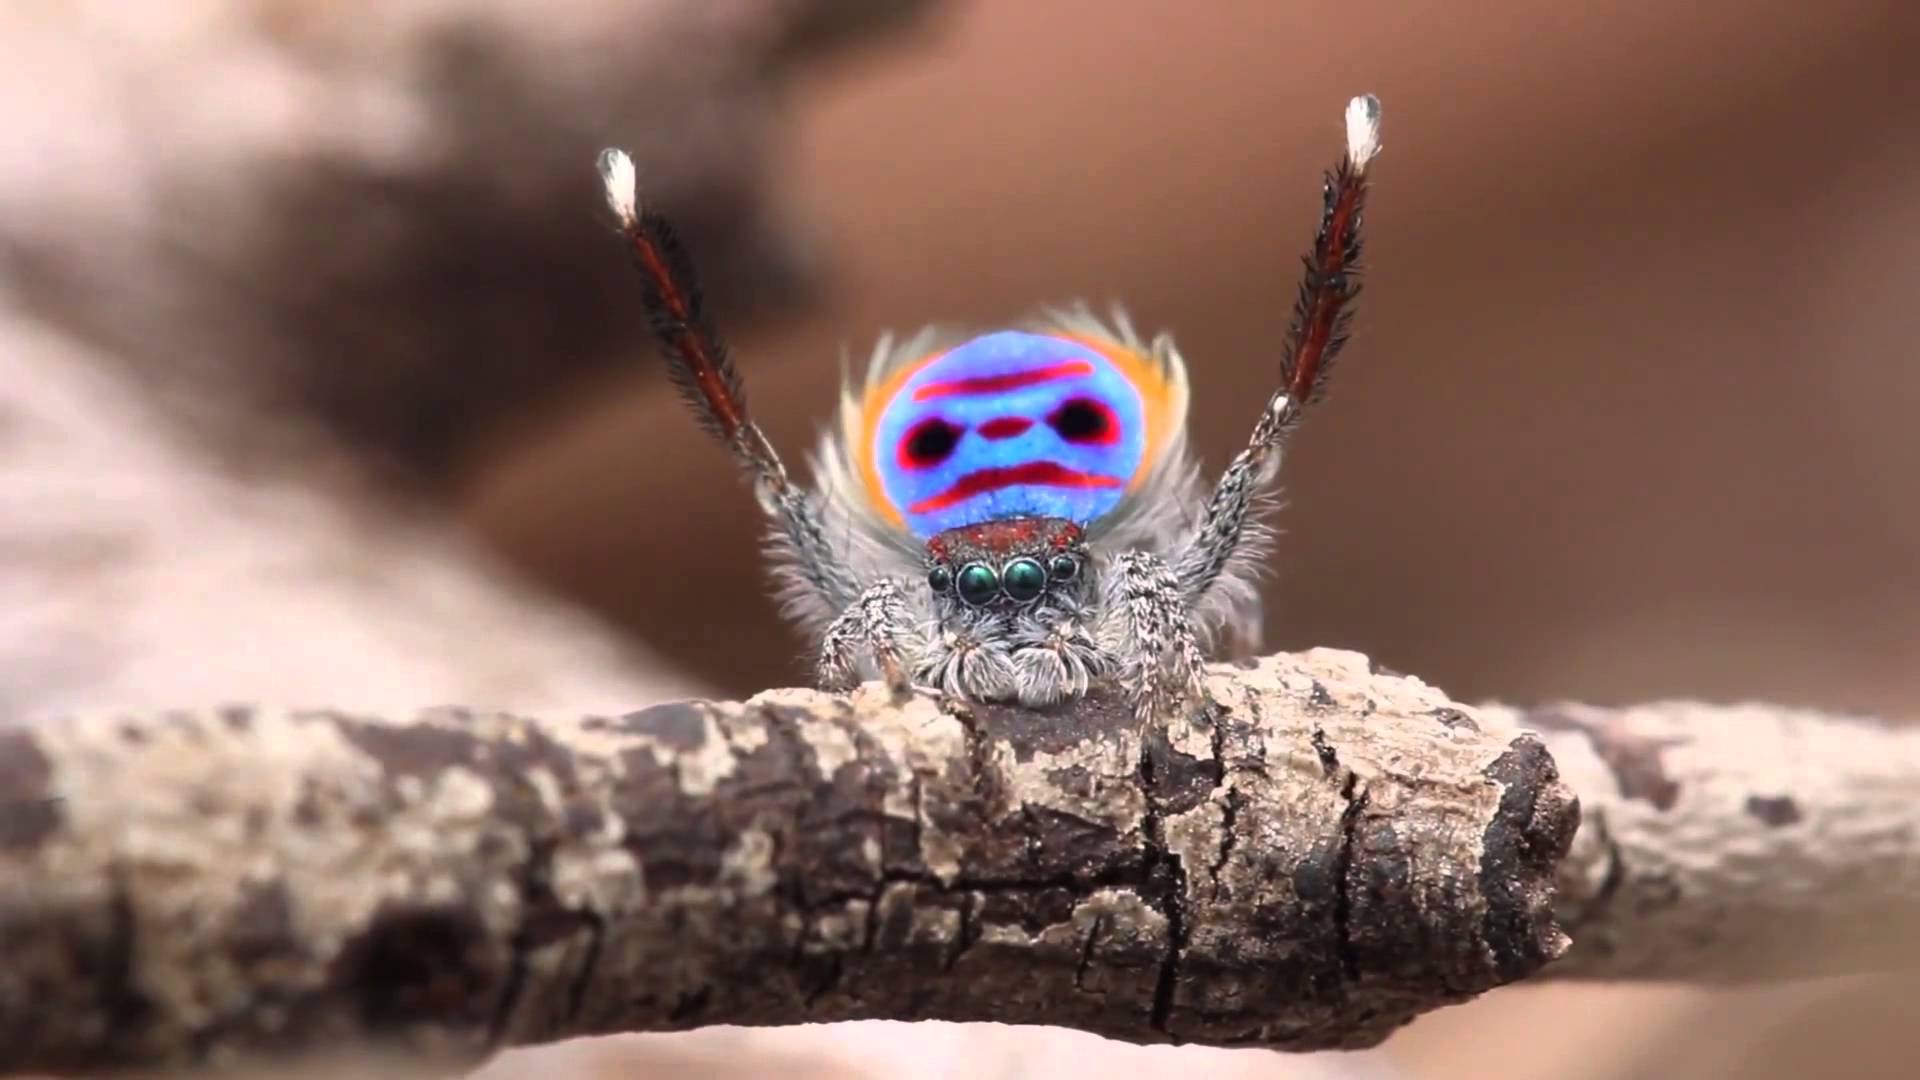 Dancing Peacock Spider